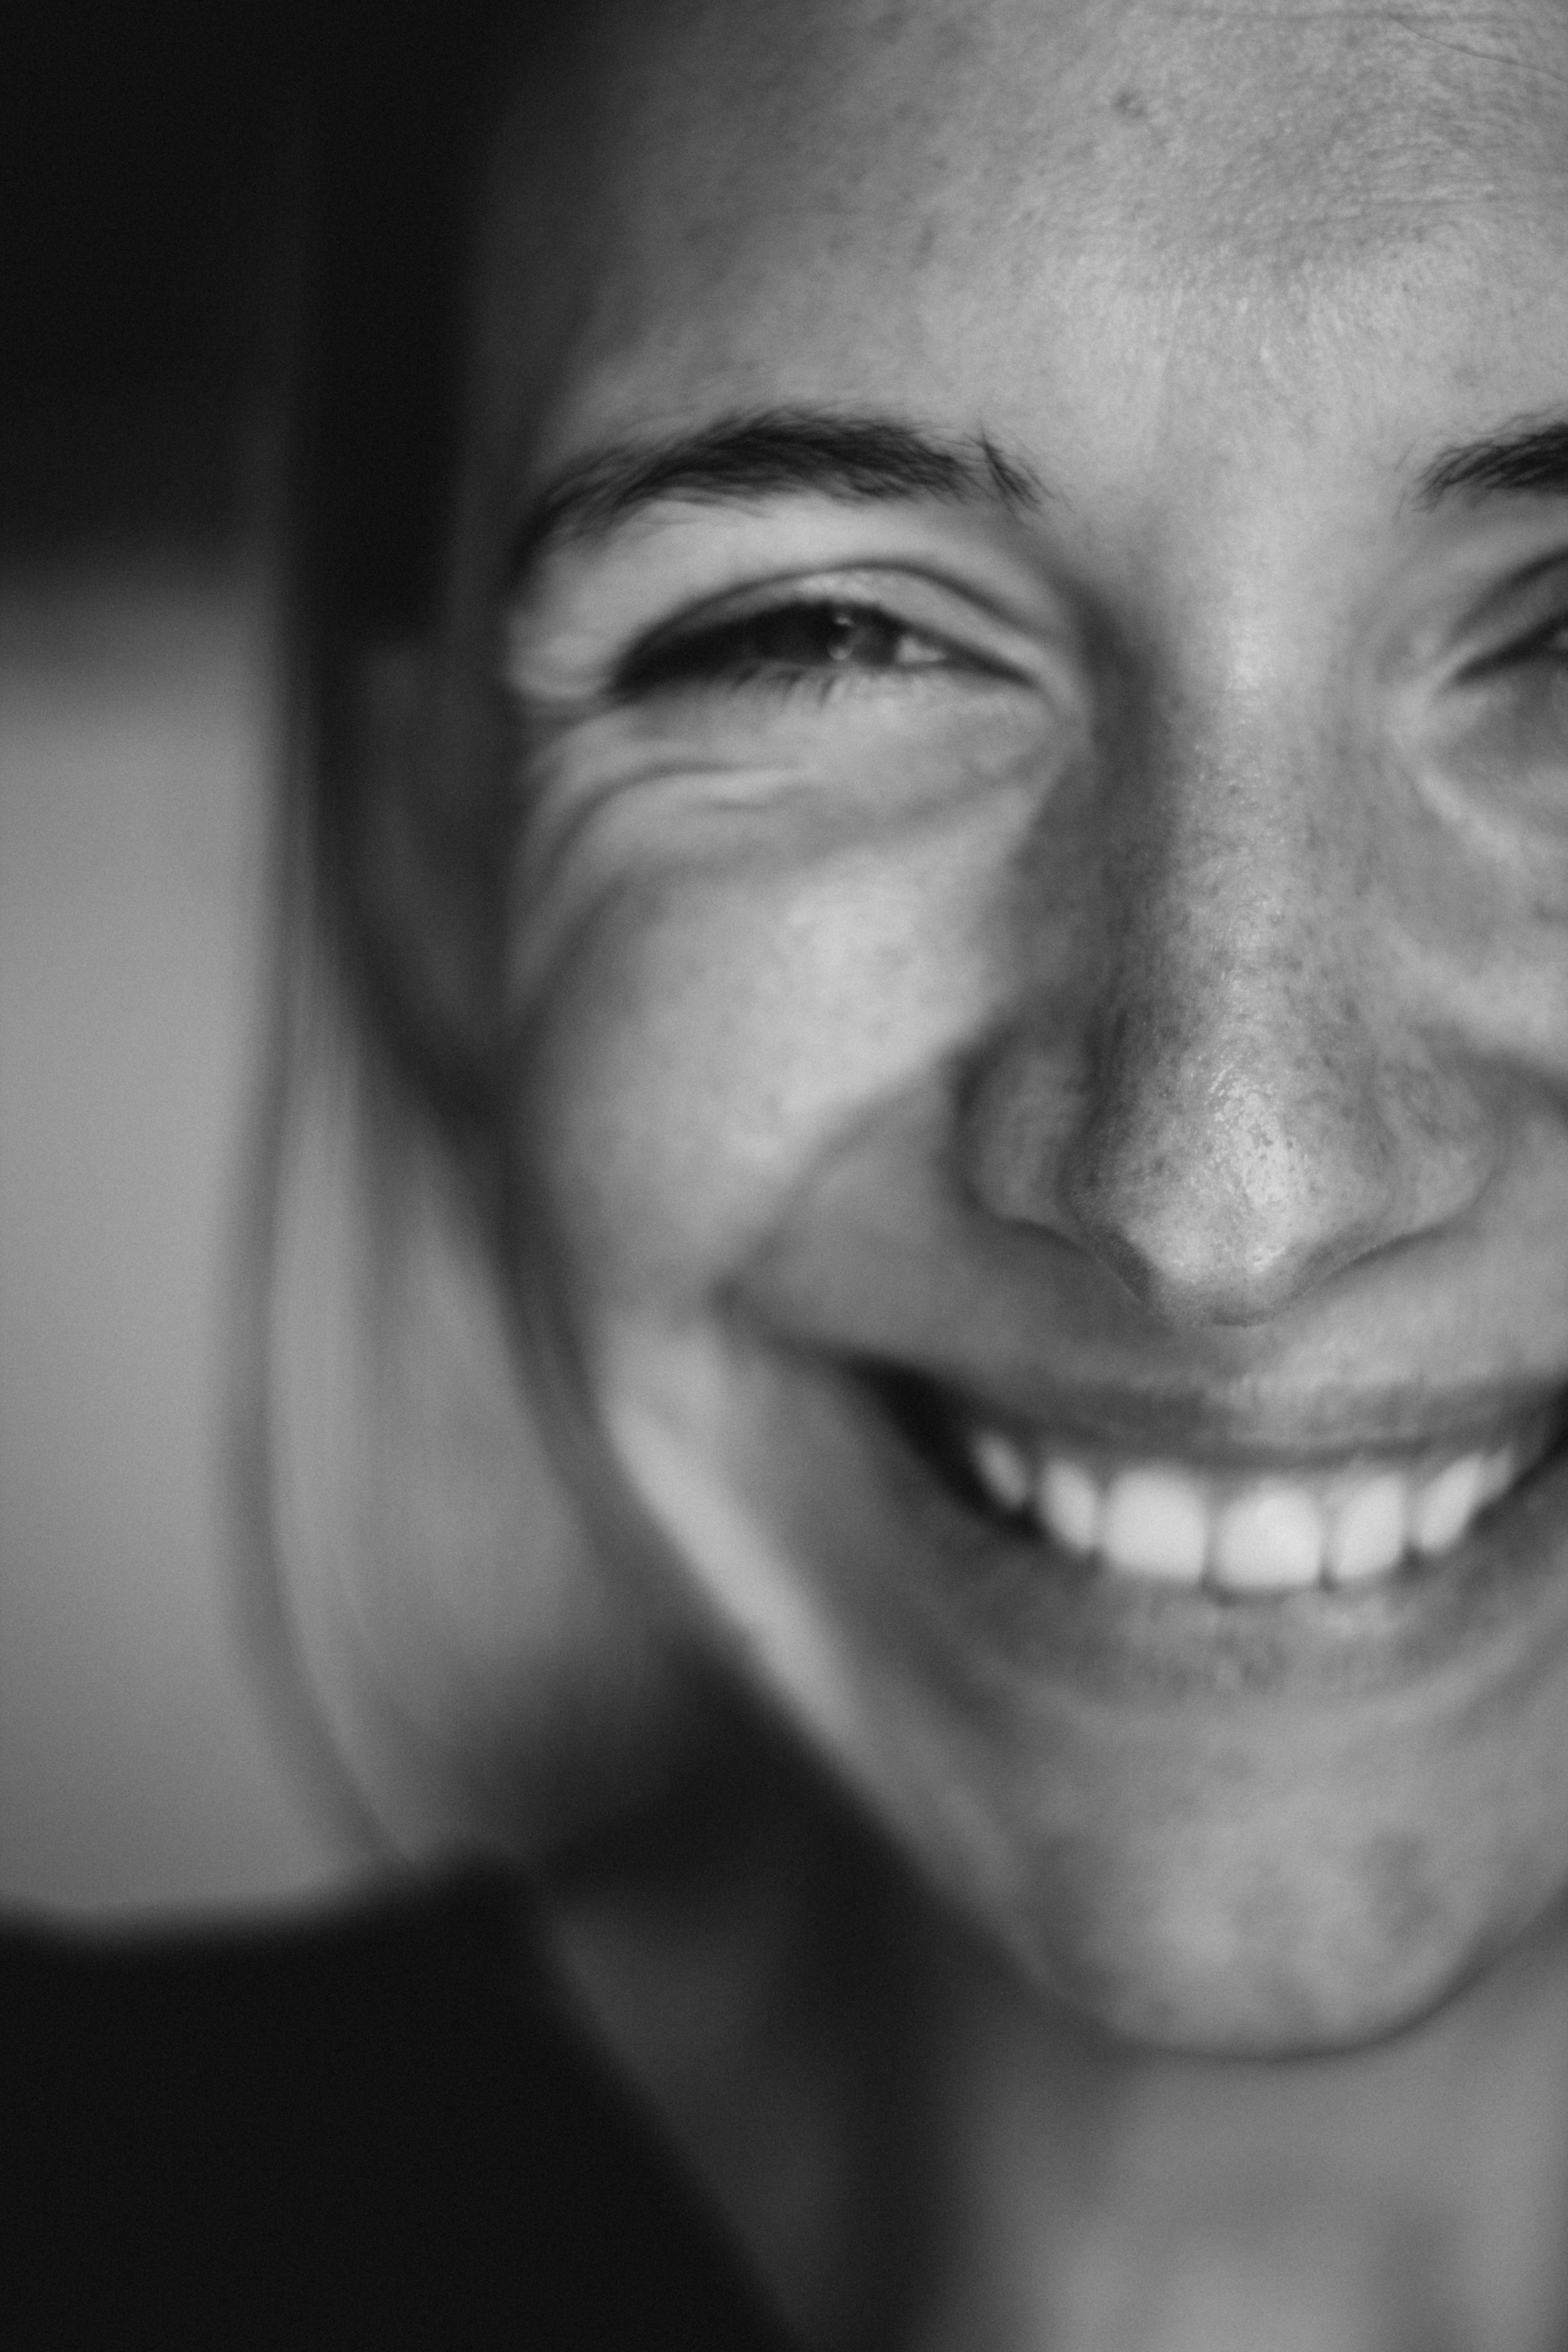 A woman smiling | Source: Unplash